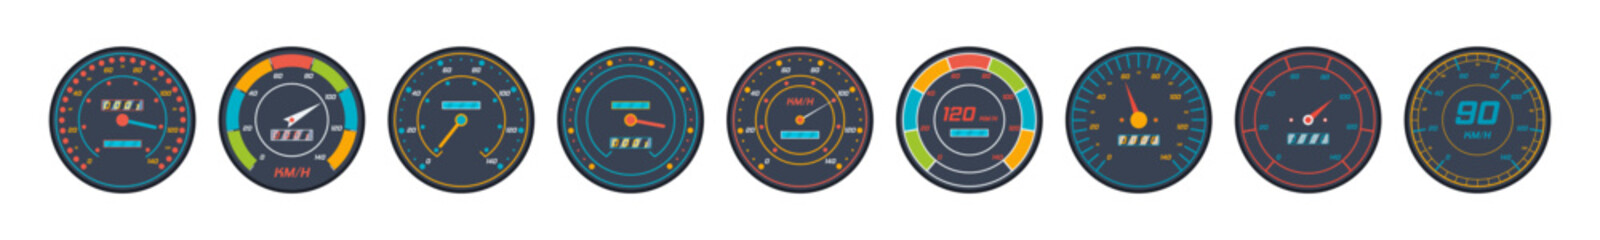 Set of car speedometer level indicator icons isolated on white background. Engine speedometer icons set in flat design. Vector illustration